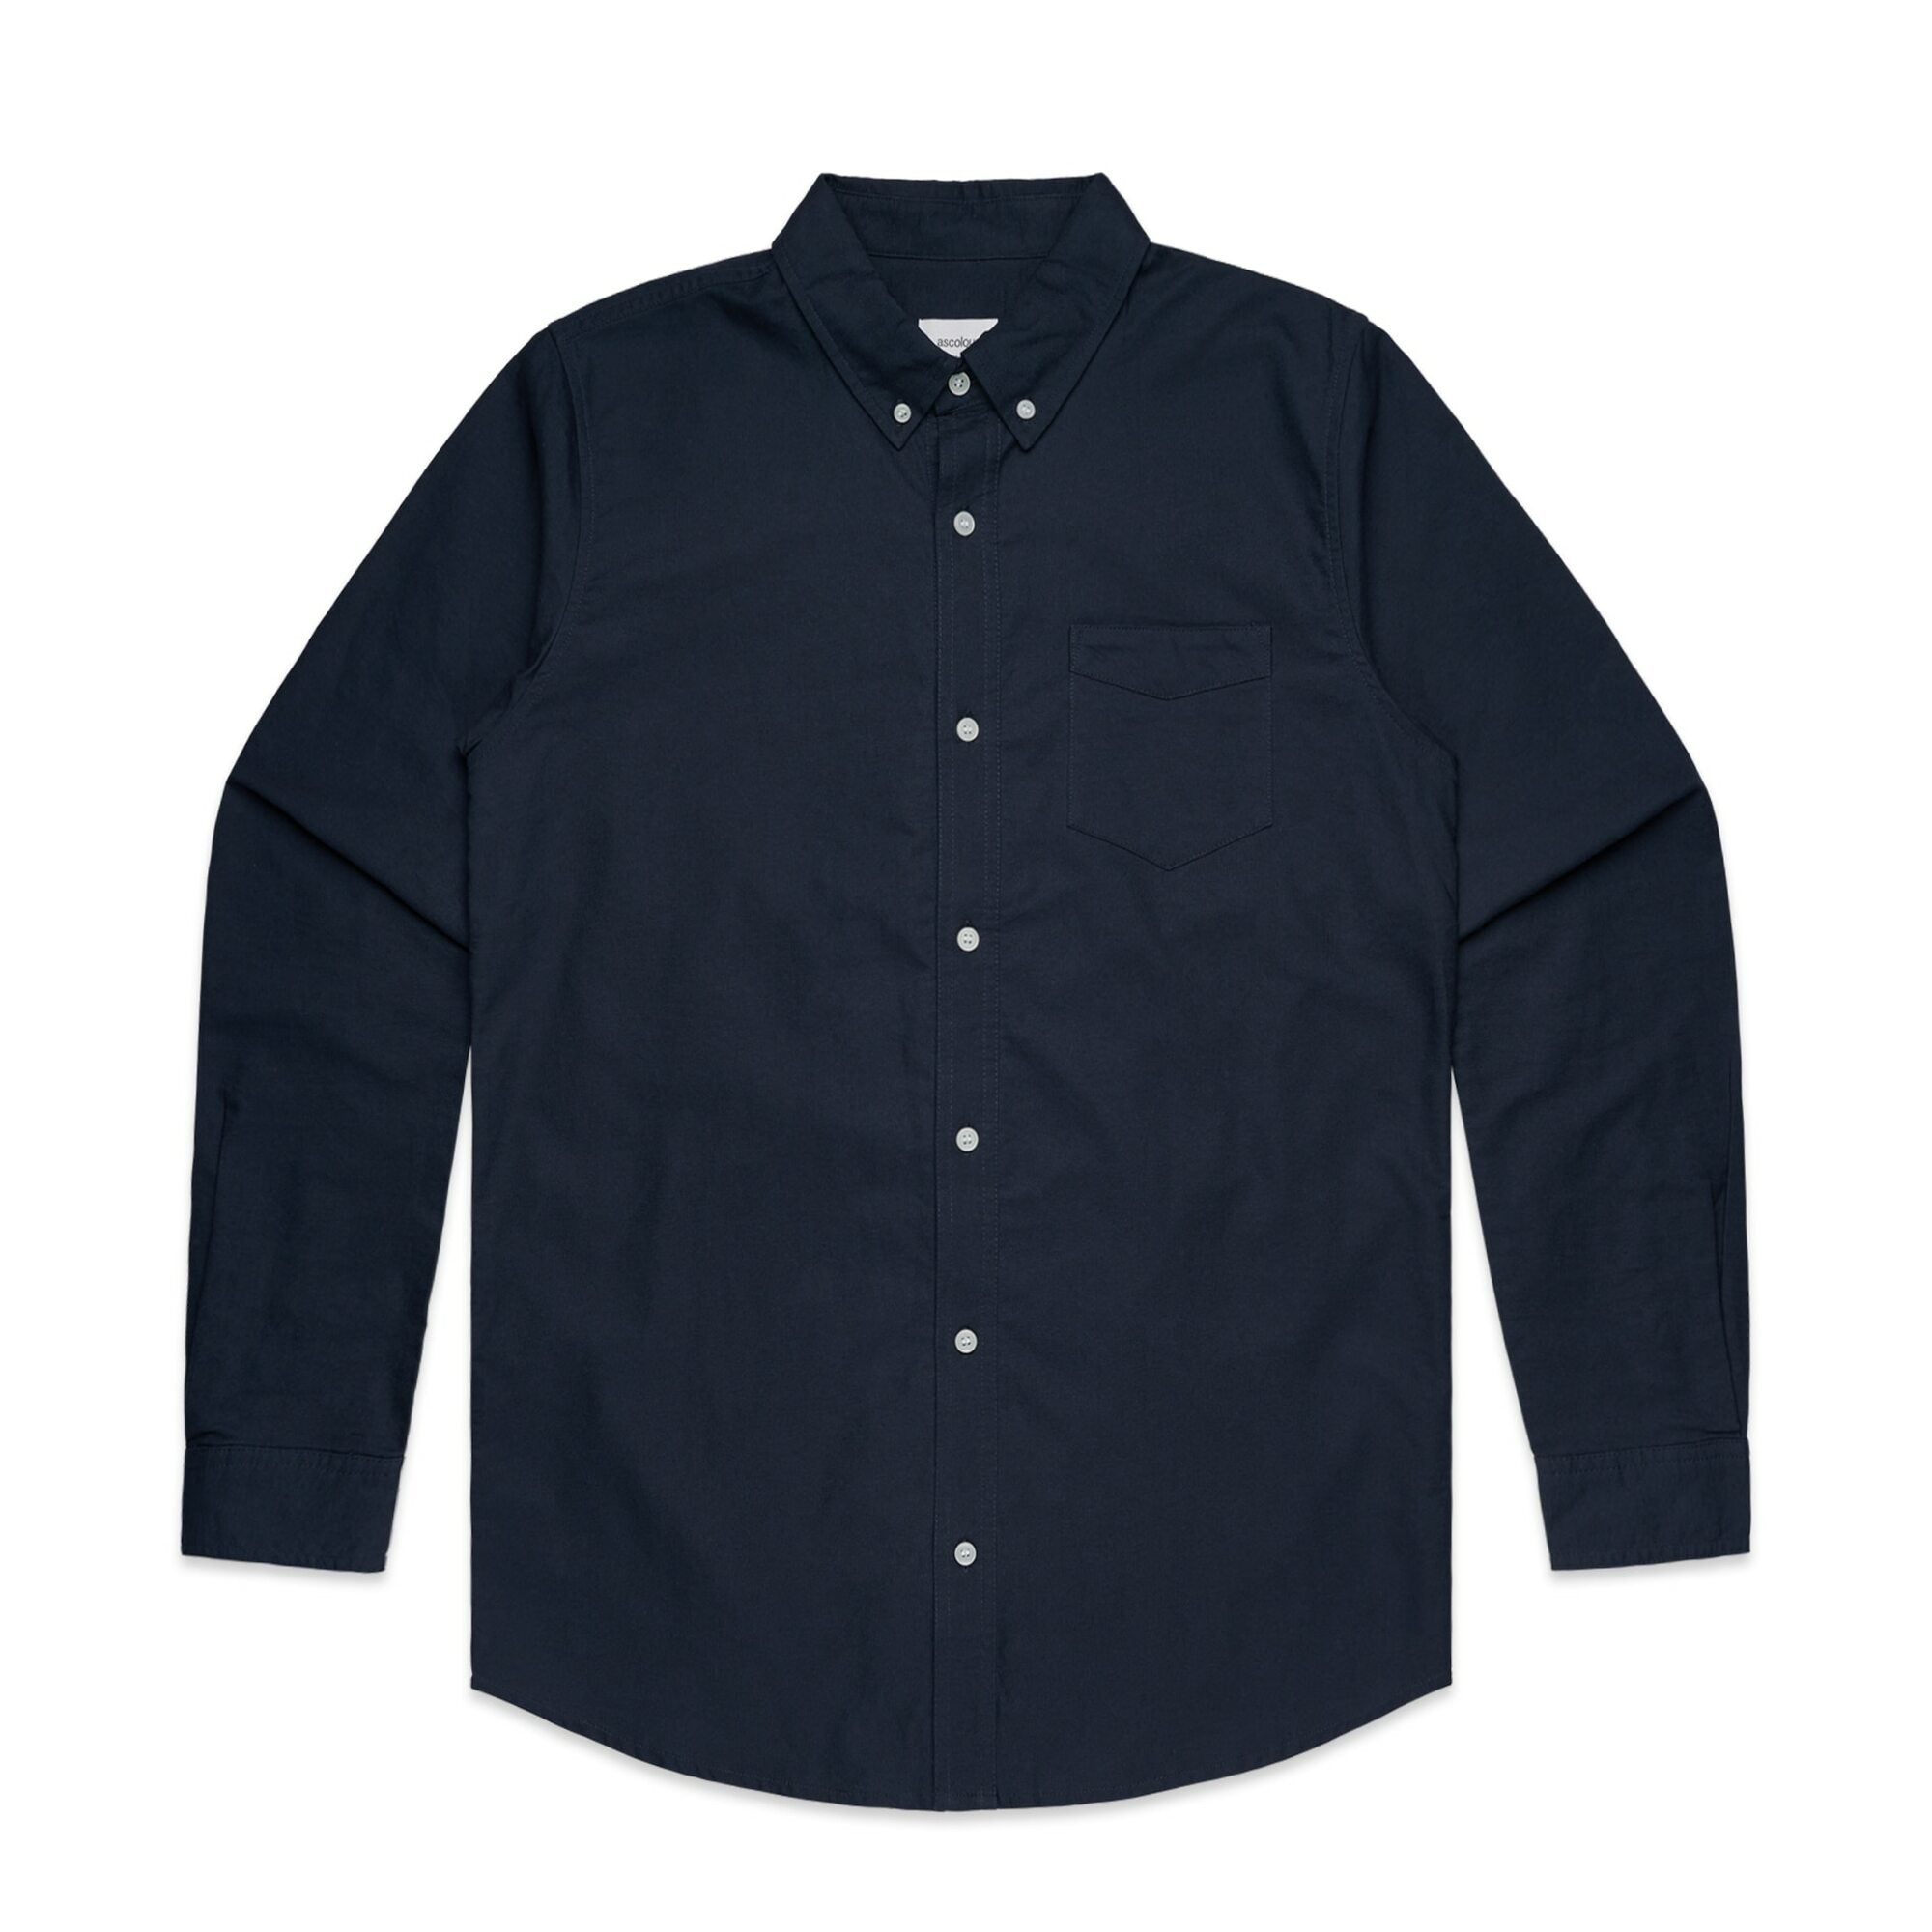 AS Colour | Men's Oxford Shirt - Custom Clothing | T Shirt Printing | Embroidery | Screen Printing | Print Room NZ